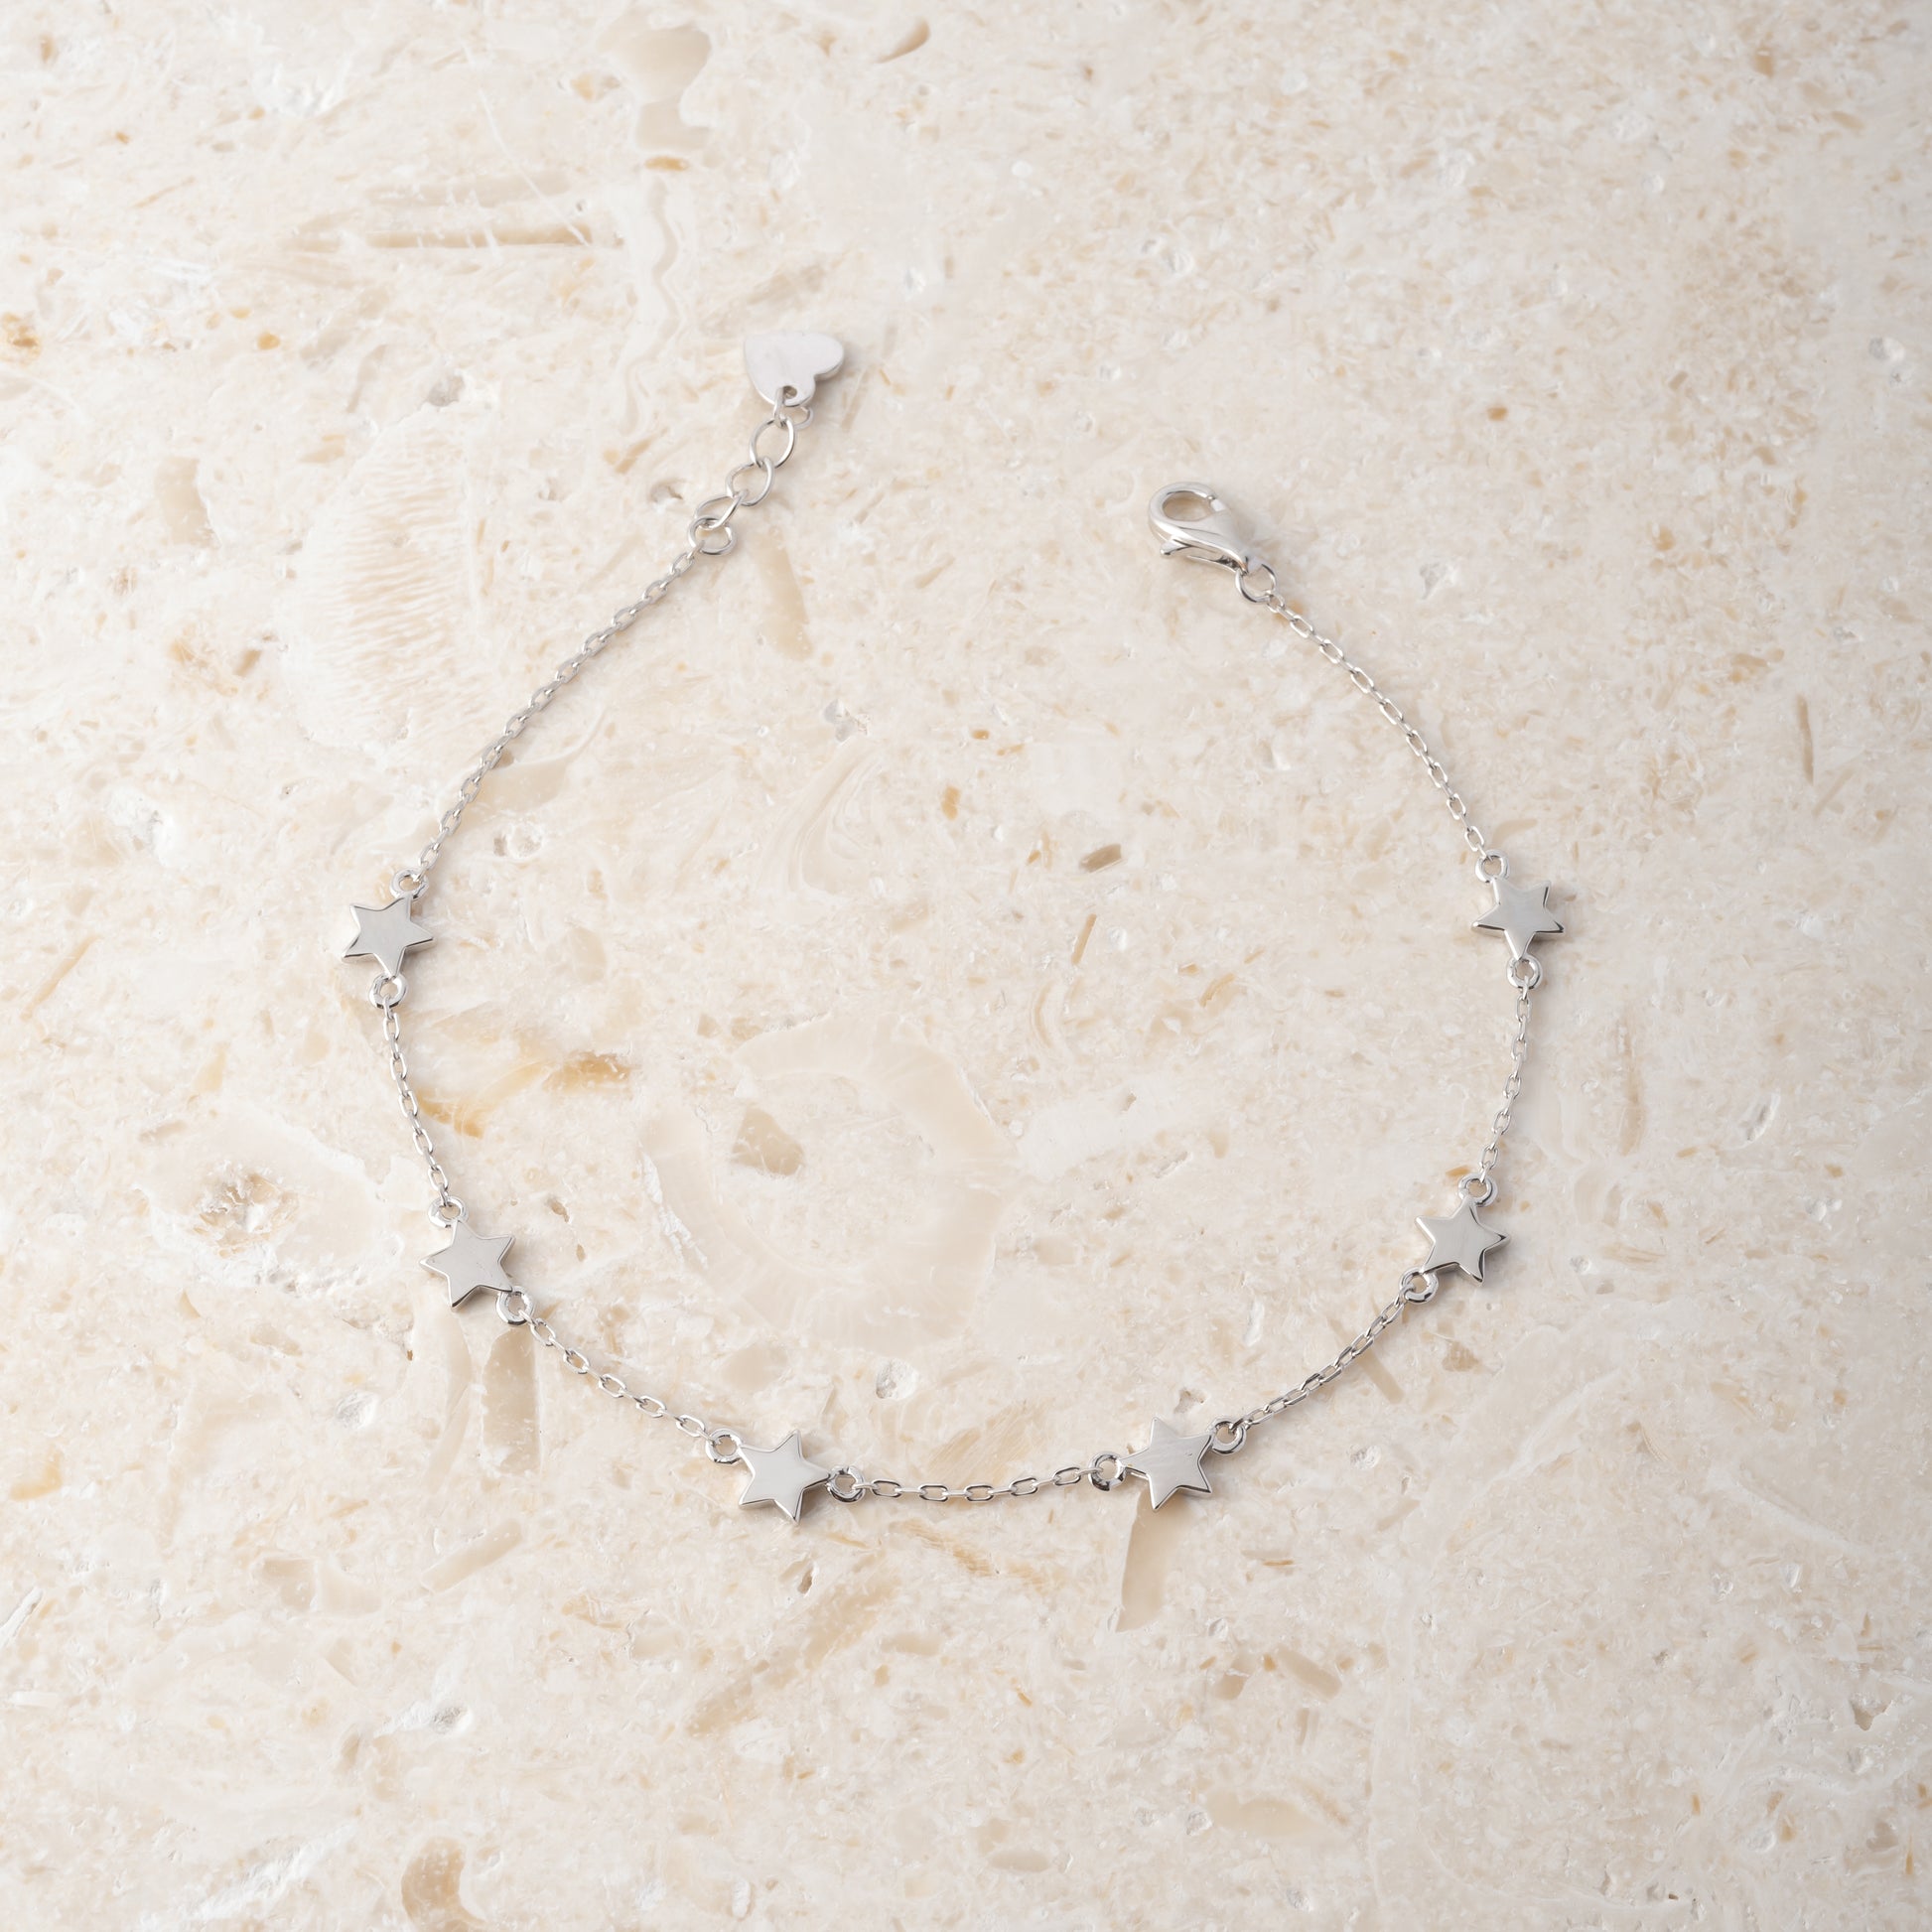 silver minimalist bracelet with star charms